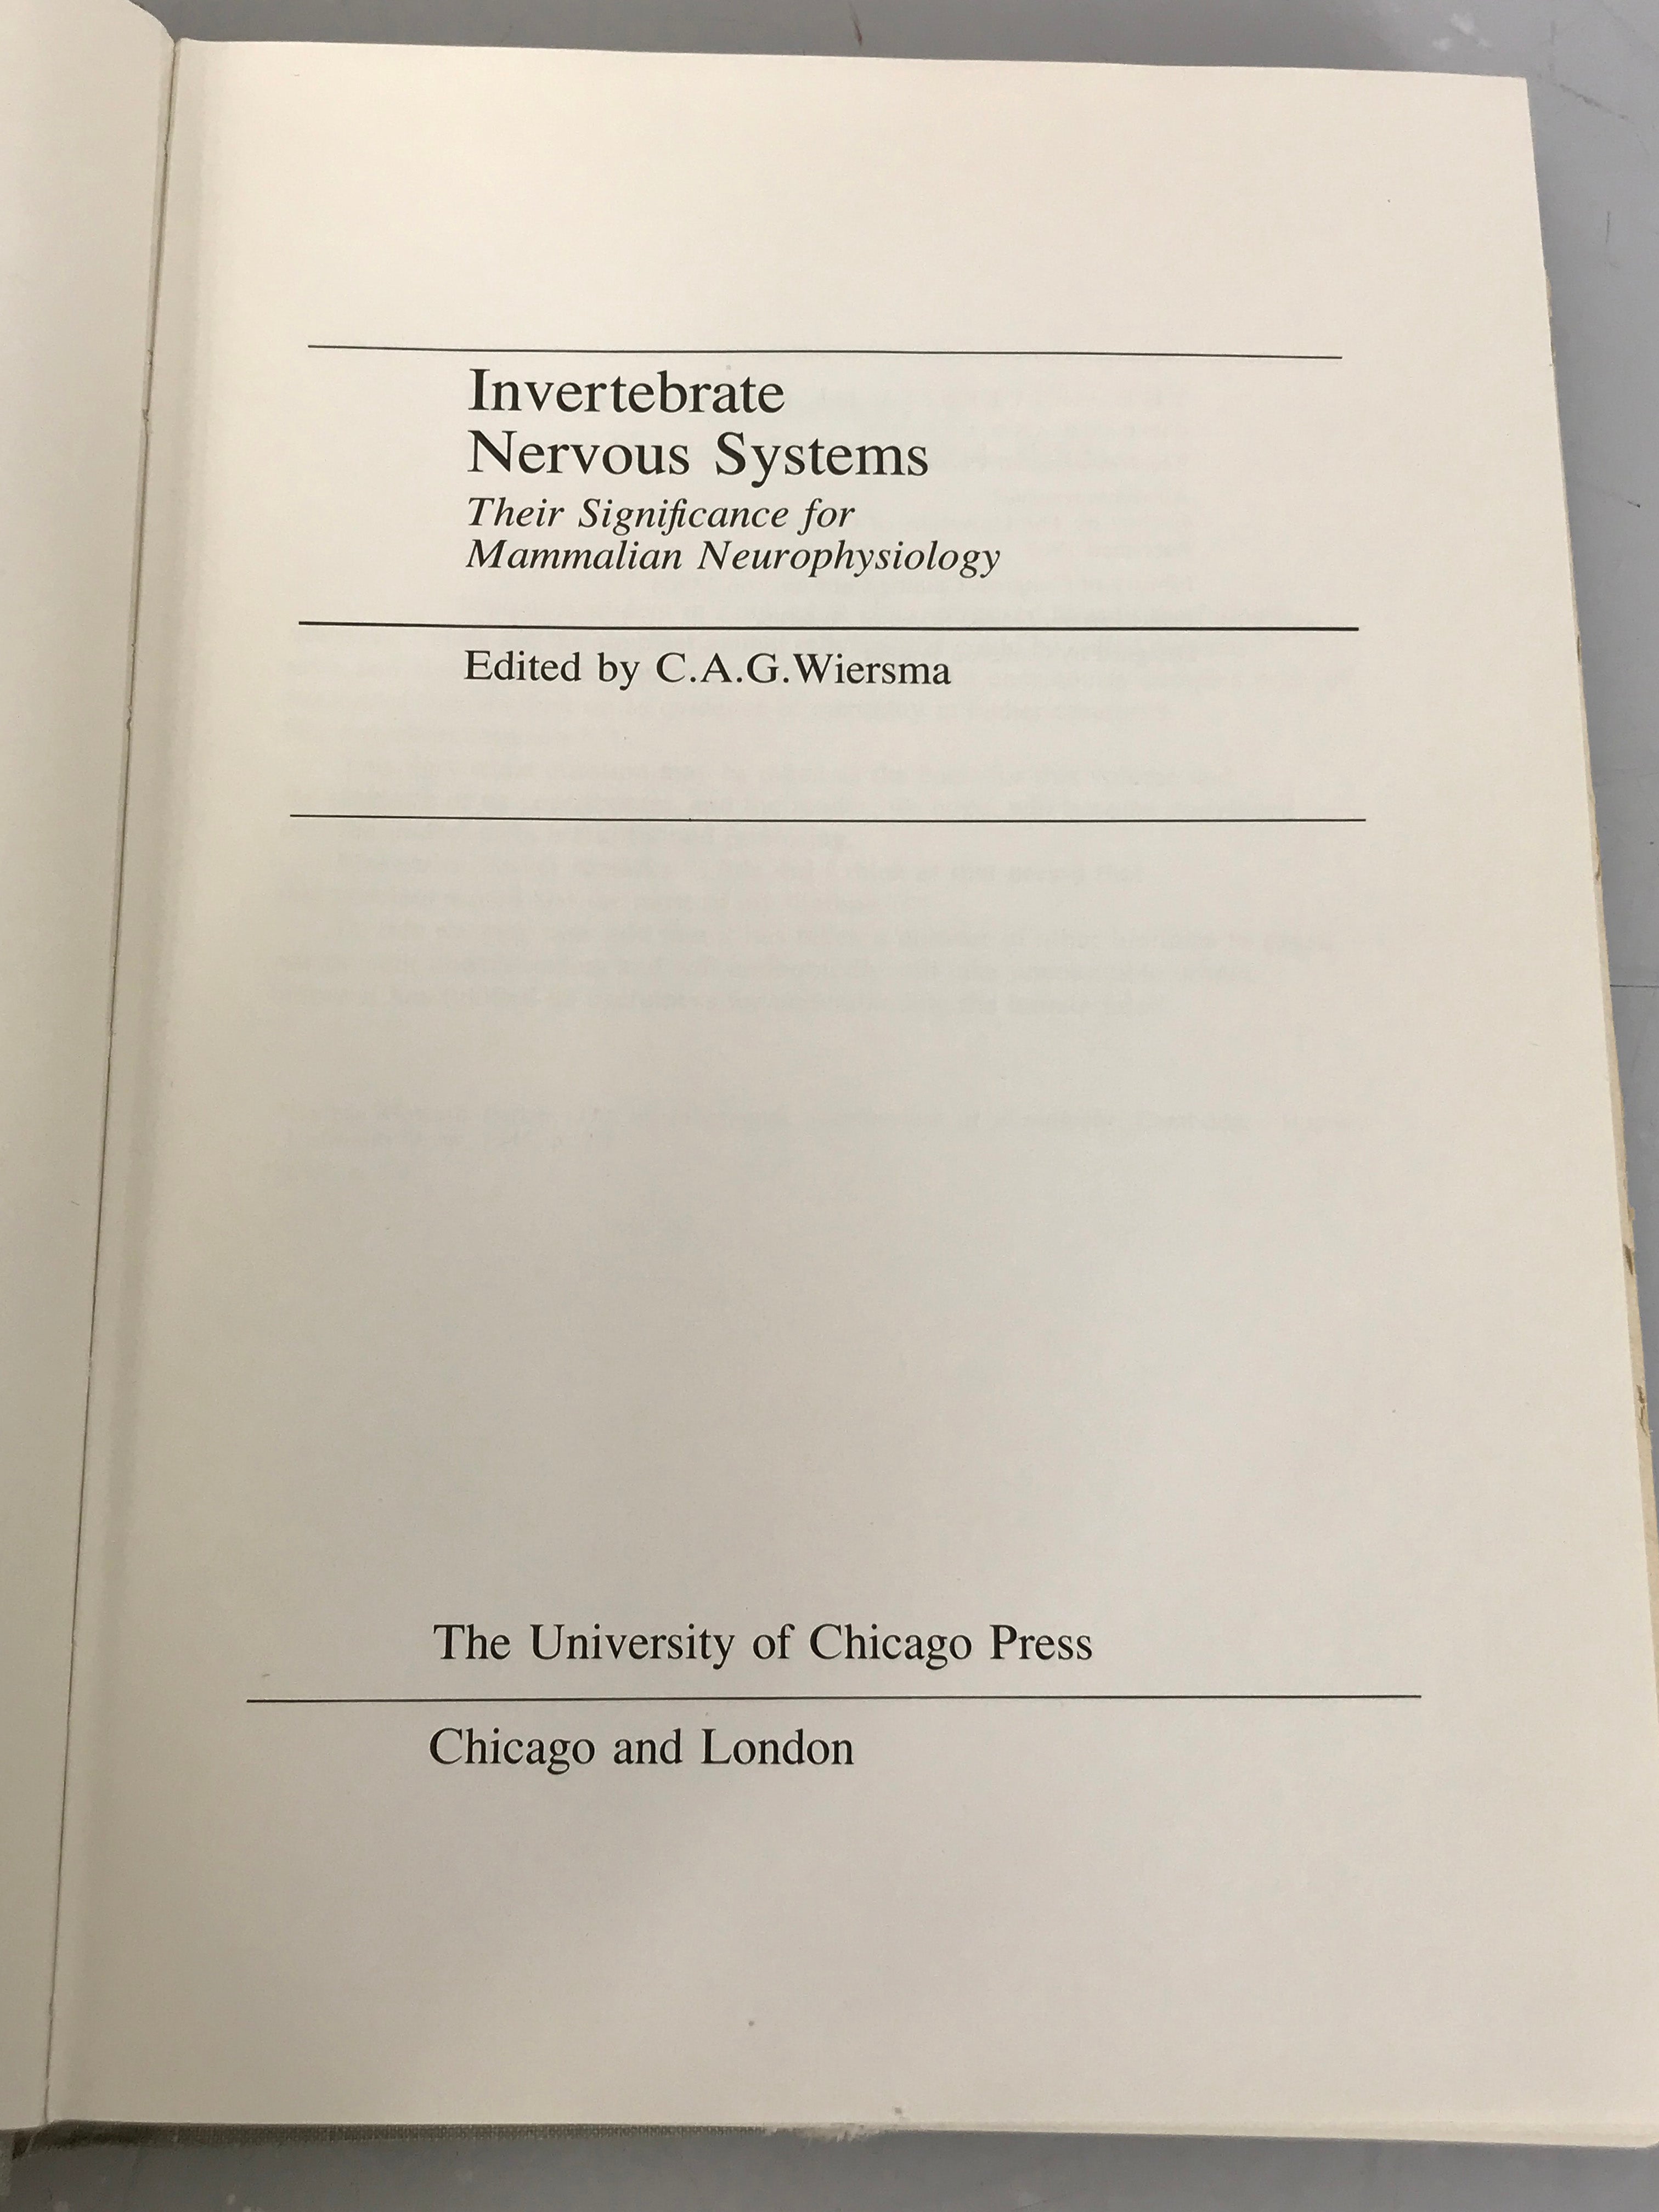 Invertebrate Nervous Systems C.A.G. Wiersma 1967 University of Chicago Press HC DJ